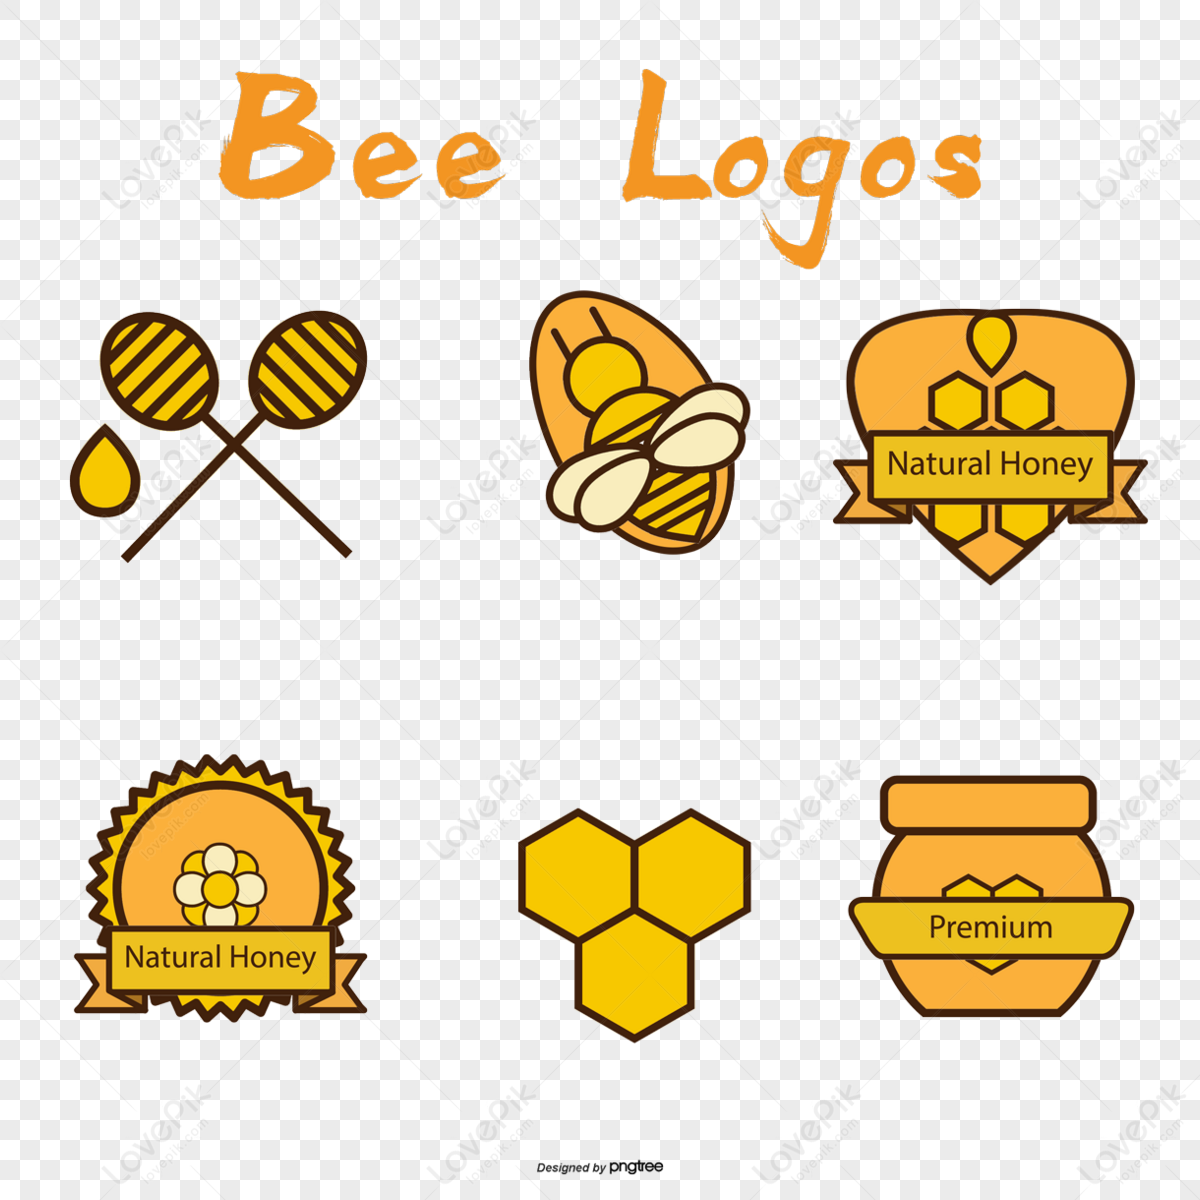 Creative hive honey logo design Royalty Free Vector Image